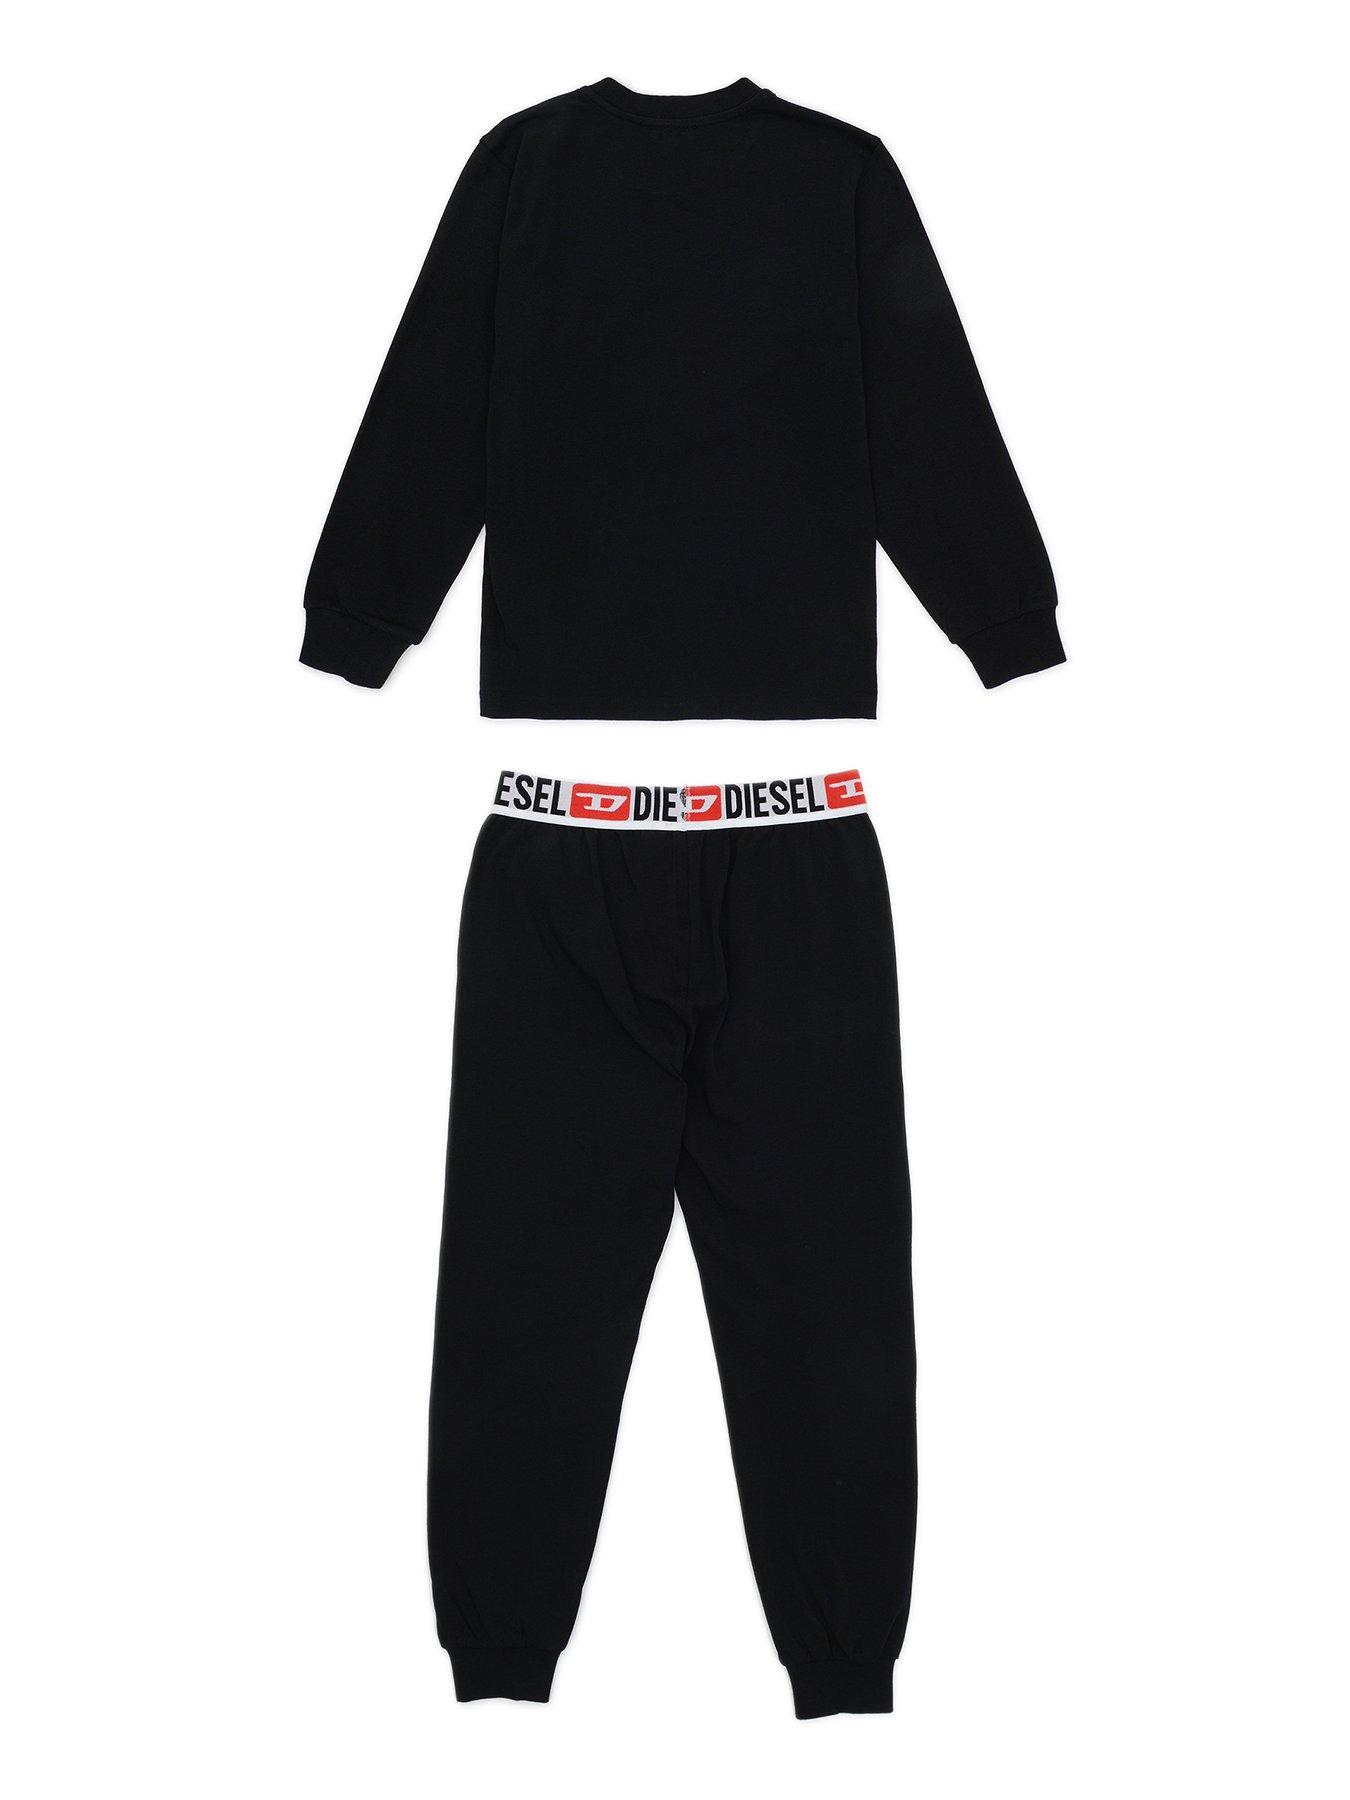  Boys Cut Logo Loungewear Pyjama Set - Black